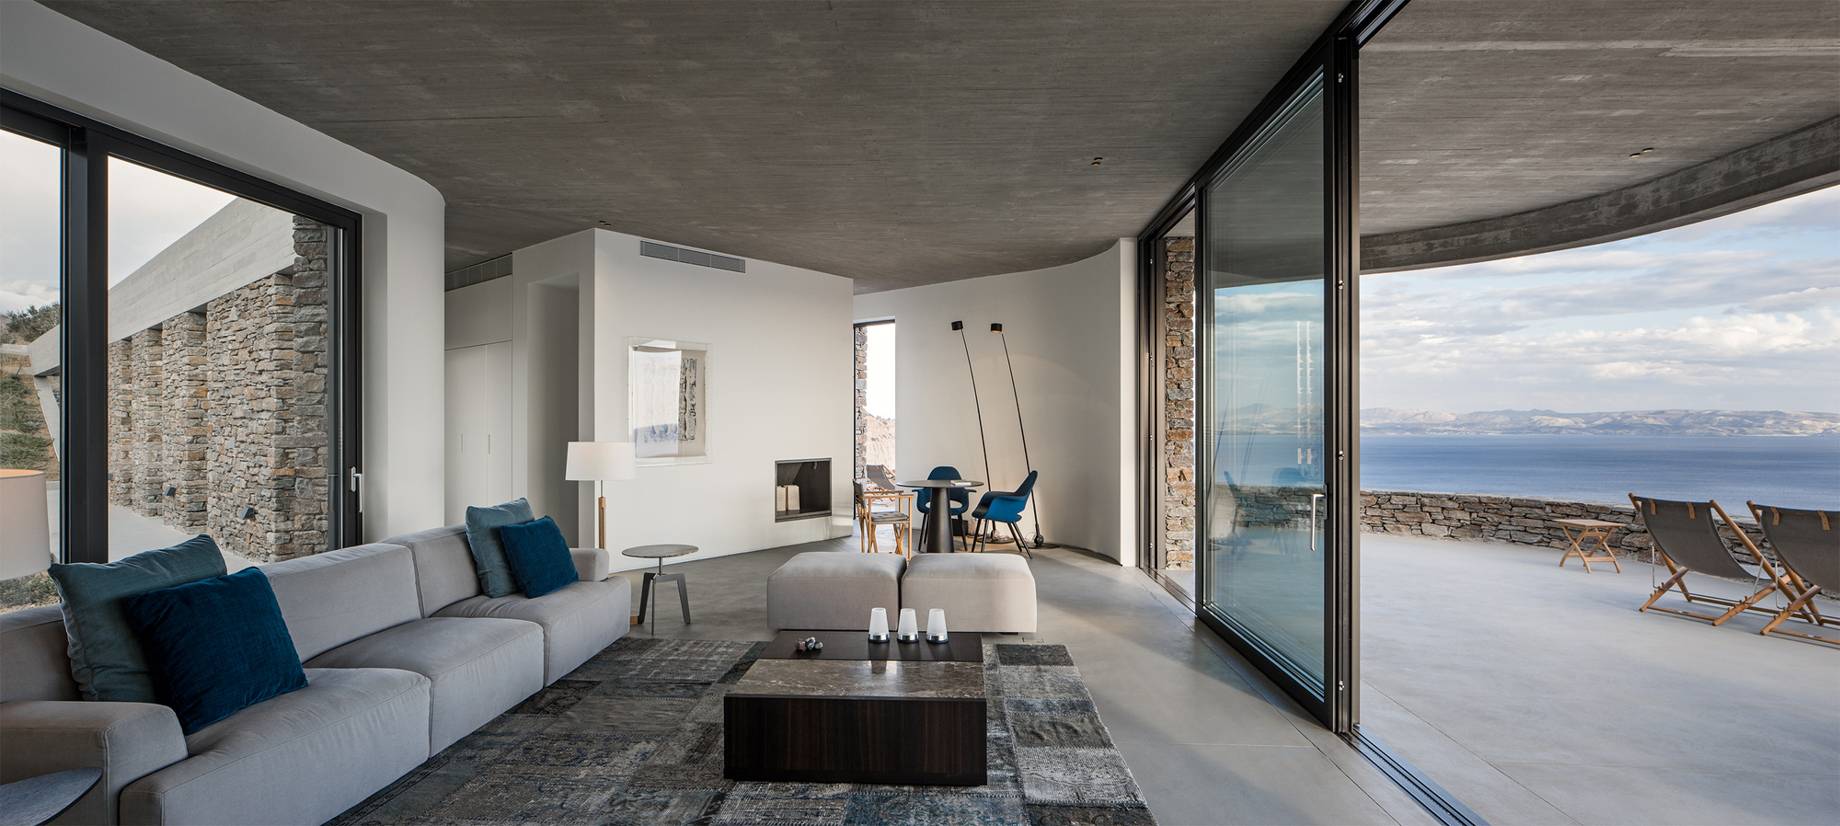 Ring House Modern Contemporary Residence – Agia Galini, Crete, Greece